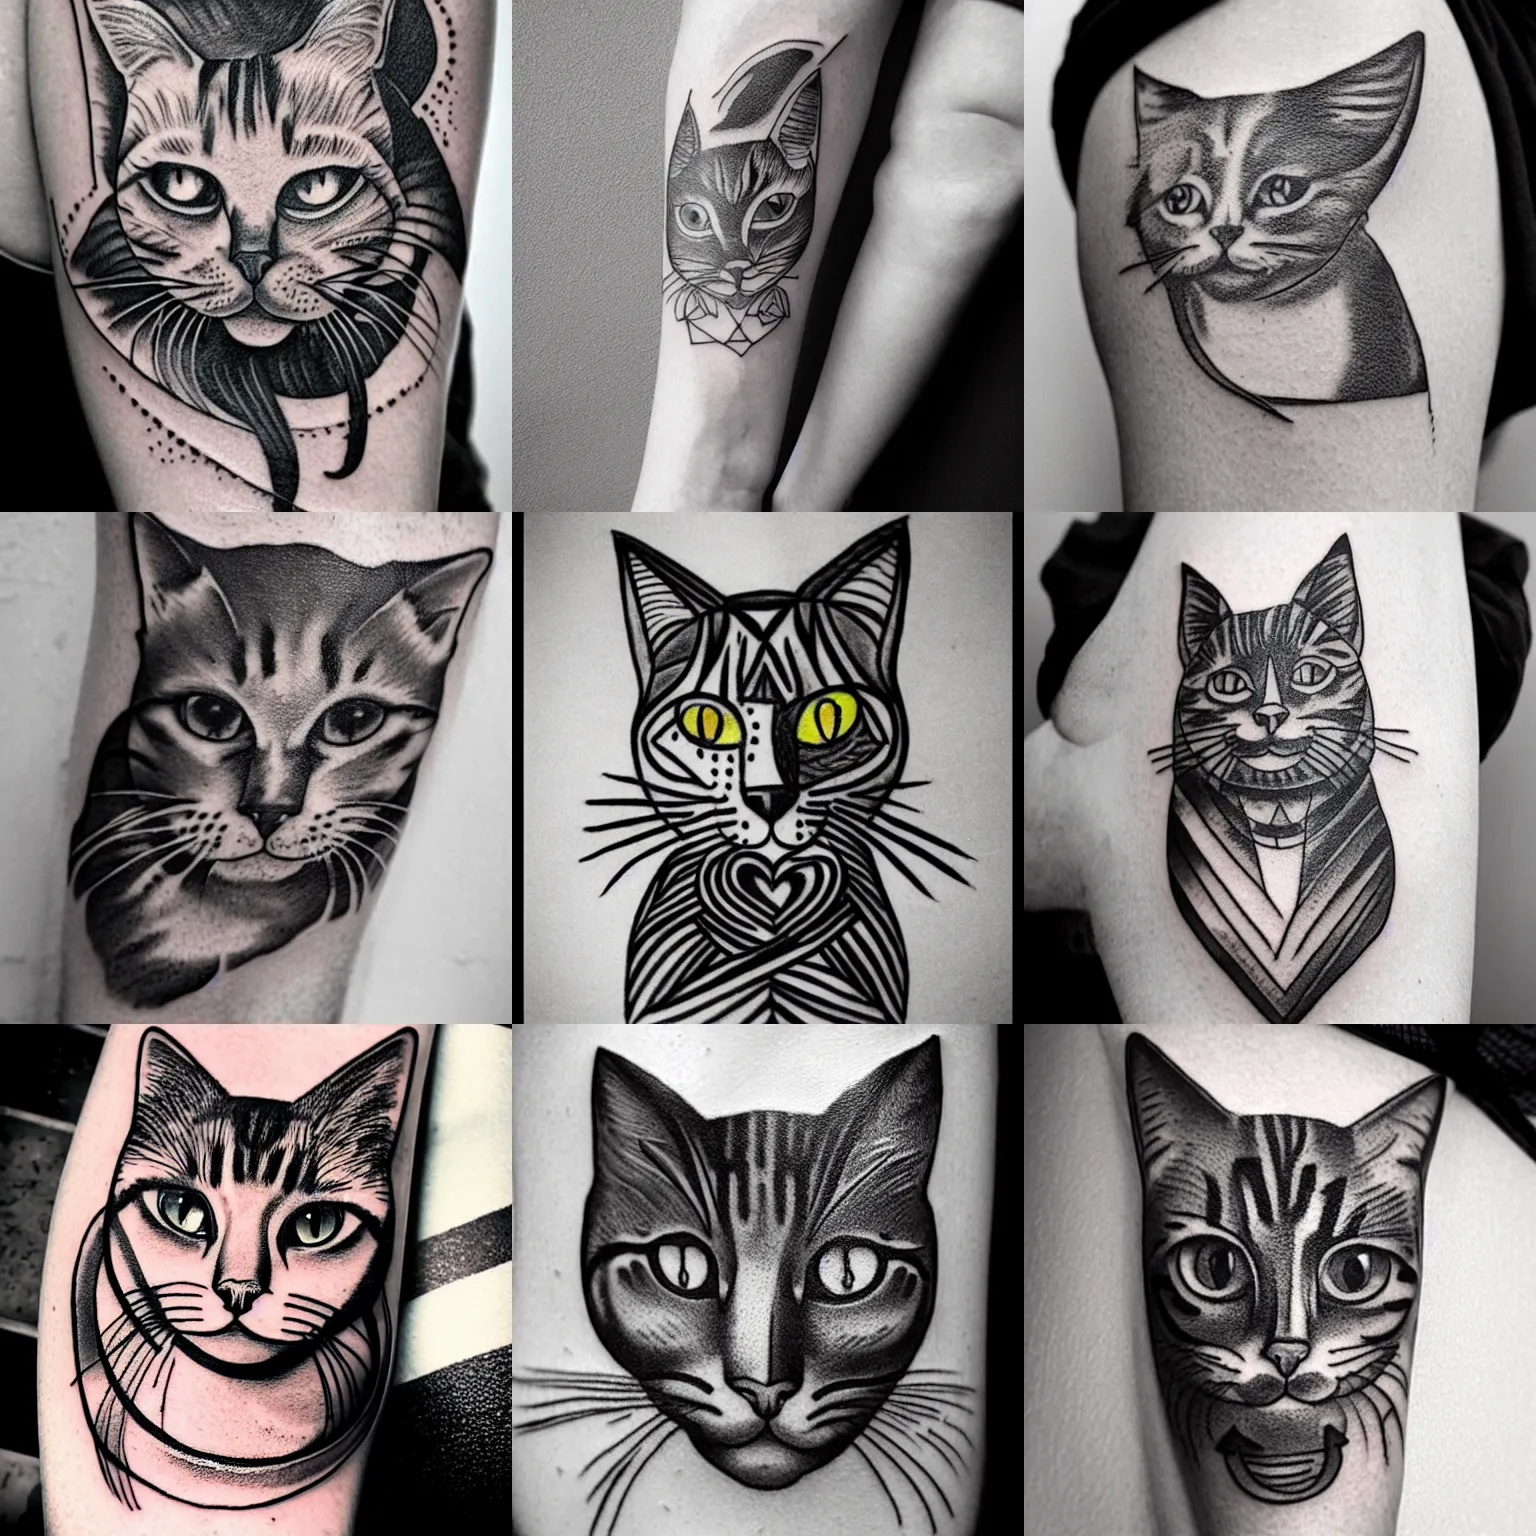 Tattoo uploaded by 𖤐 𝚜𝚝𝚎𝚙𝚑𝚊𝚗𝚒𝚎 • Flash ghost cat tattoo for my  dead cat • Tattoodo